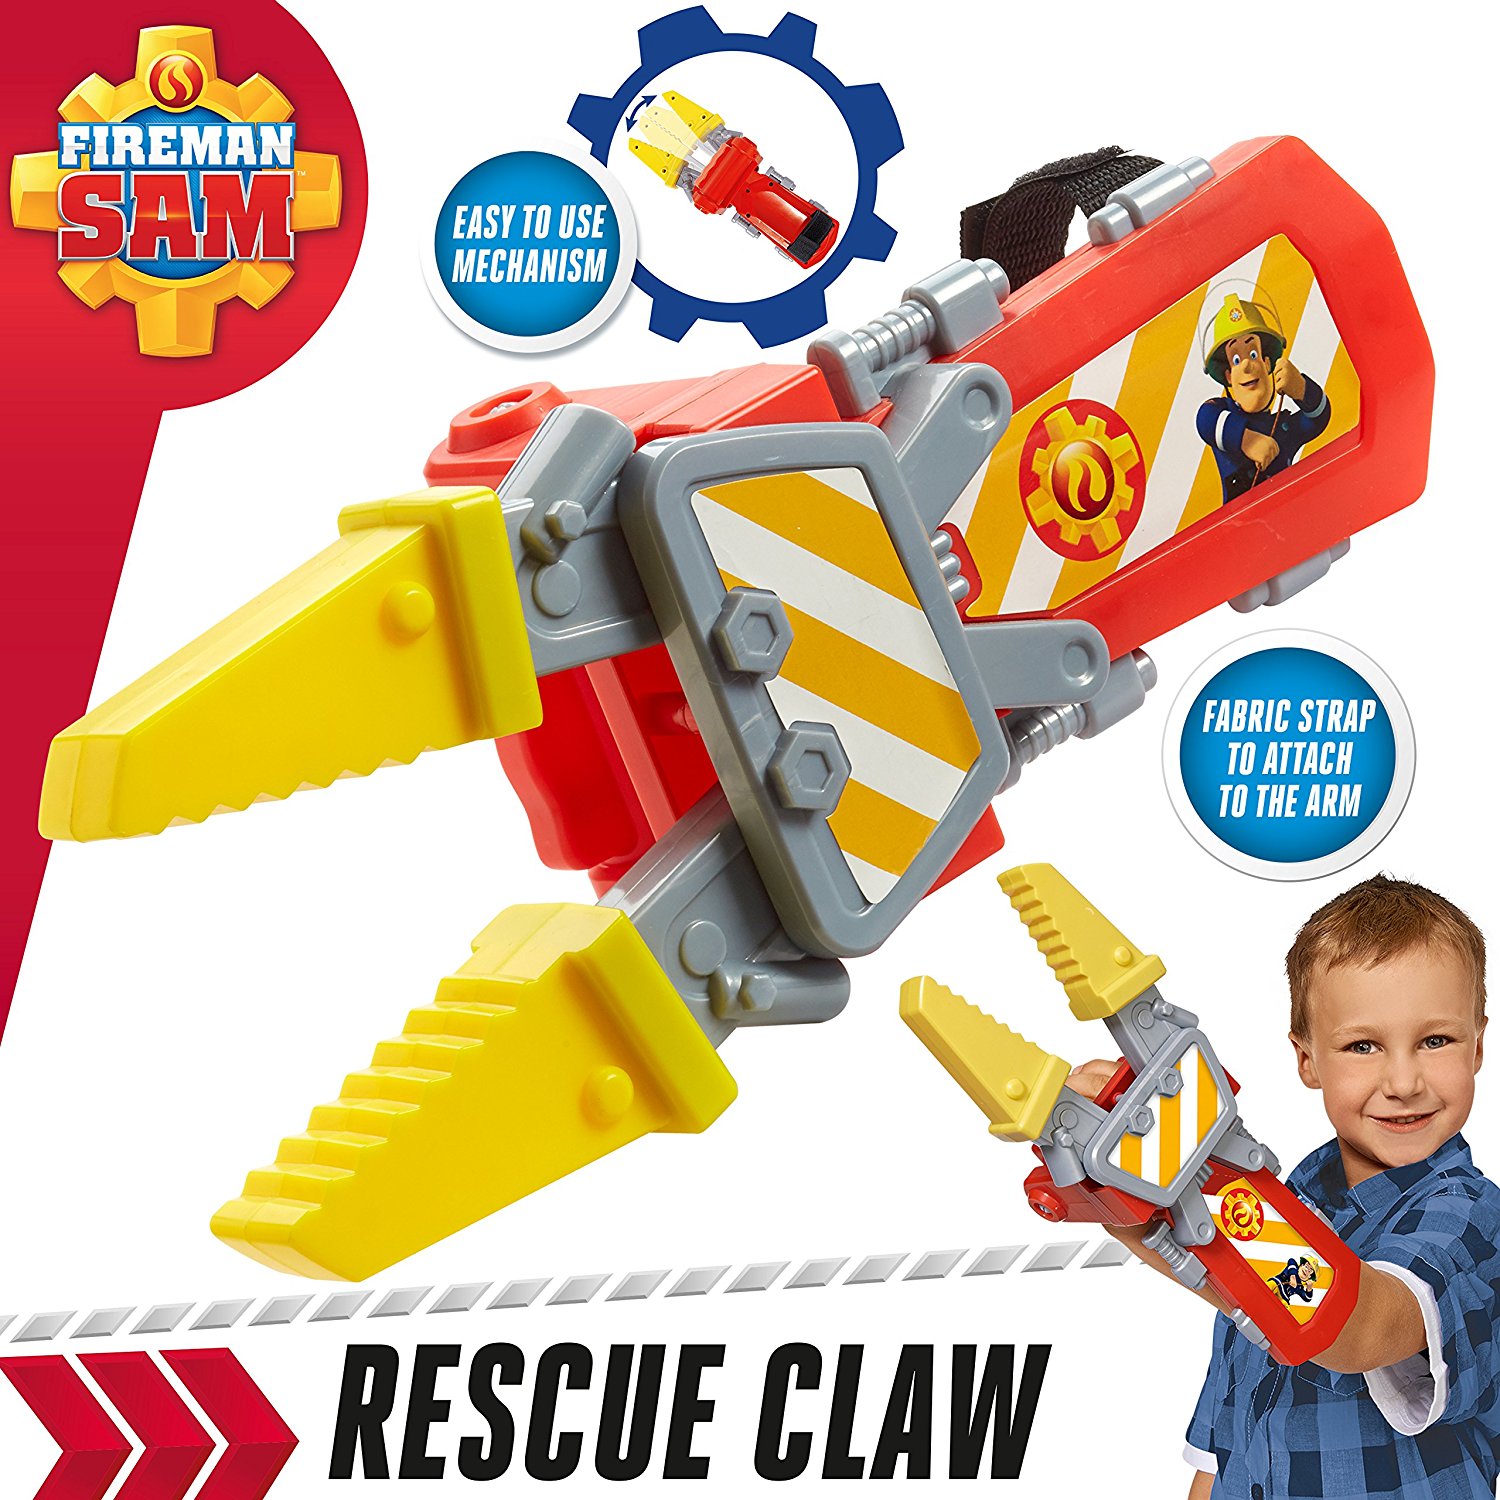 Amazon.com: Fireman Sam - Rescue Claw [Amazon Exclusive]: Toys & Games